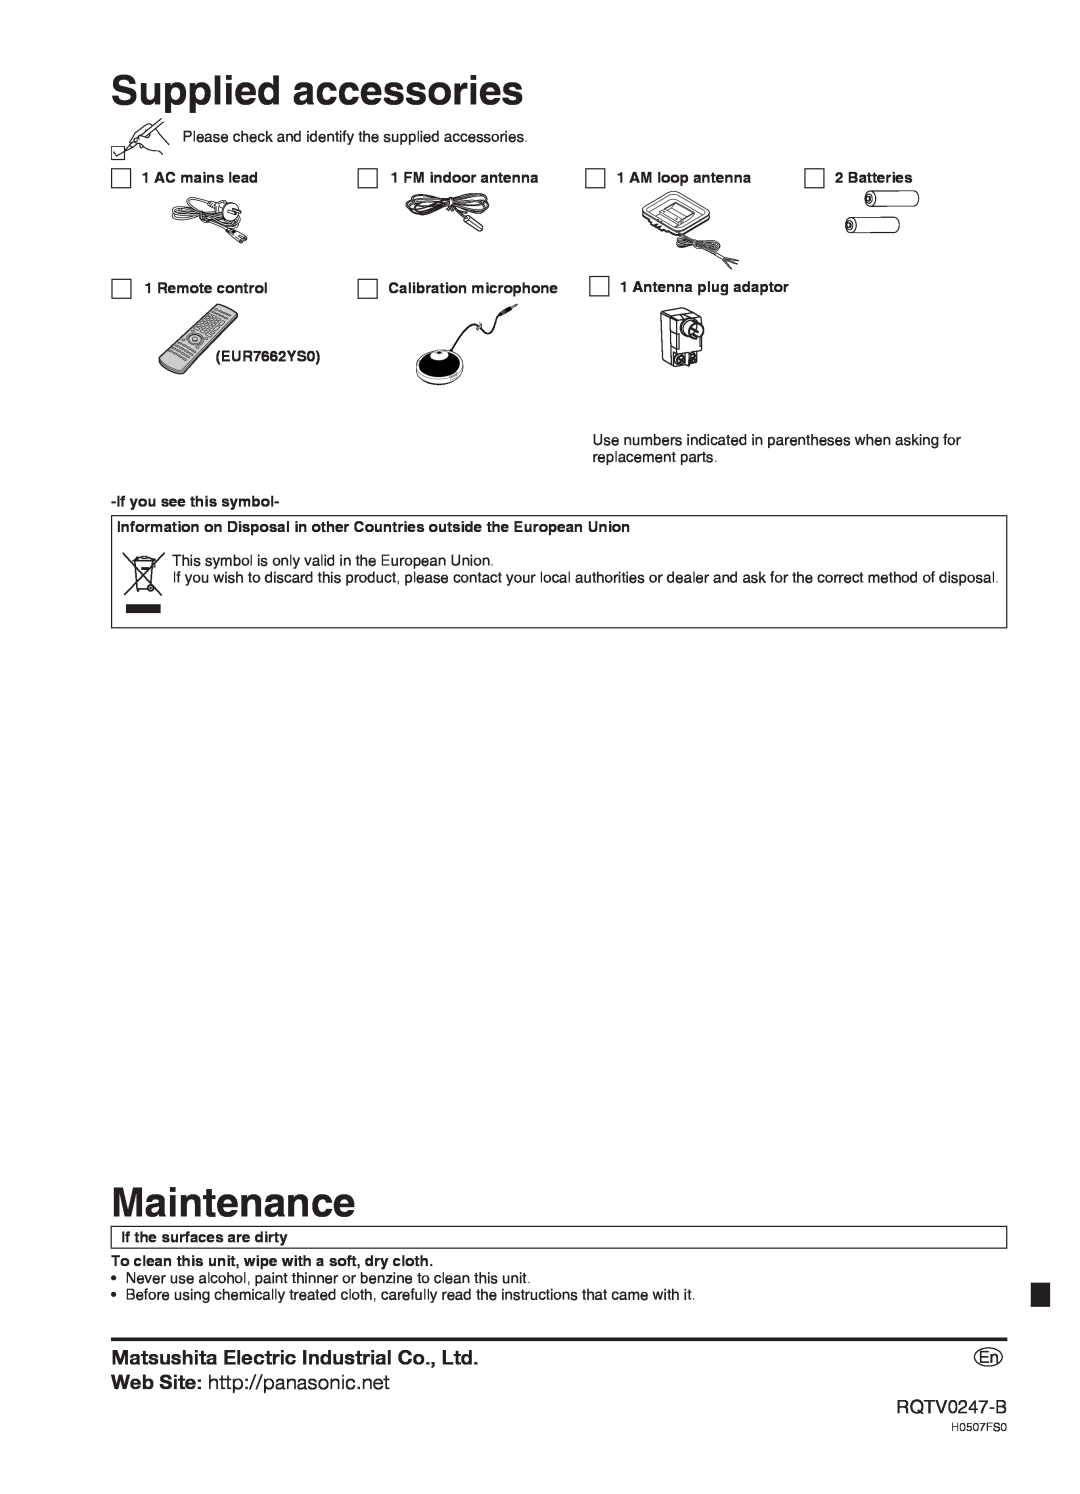 Panasonic SA-XR59 manual Supplied accessories, Maintenance, RQTV0247-B 